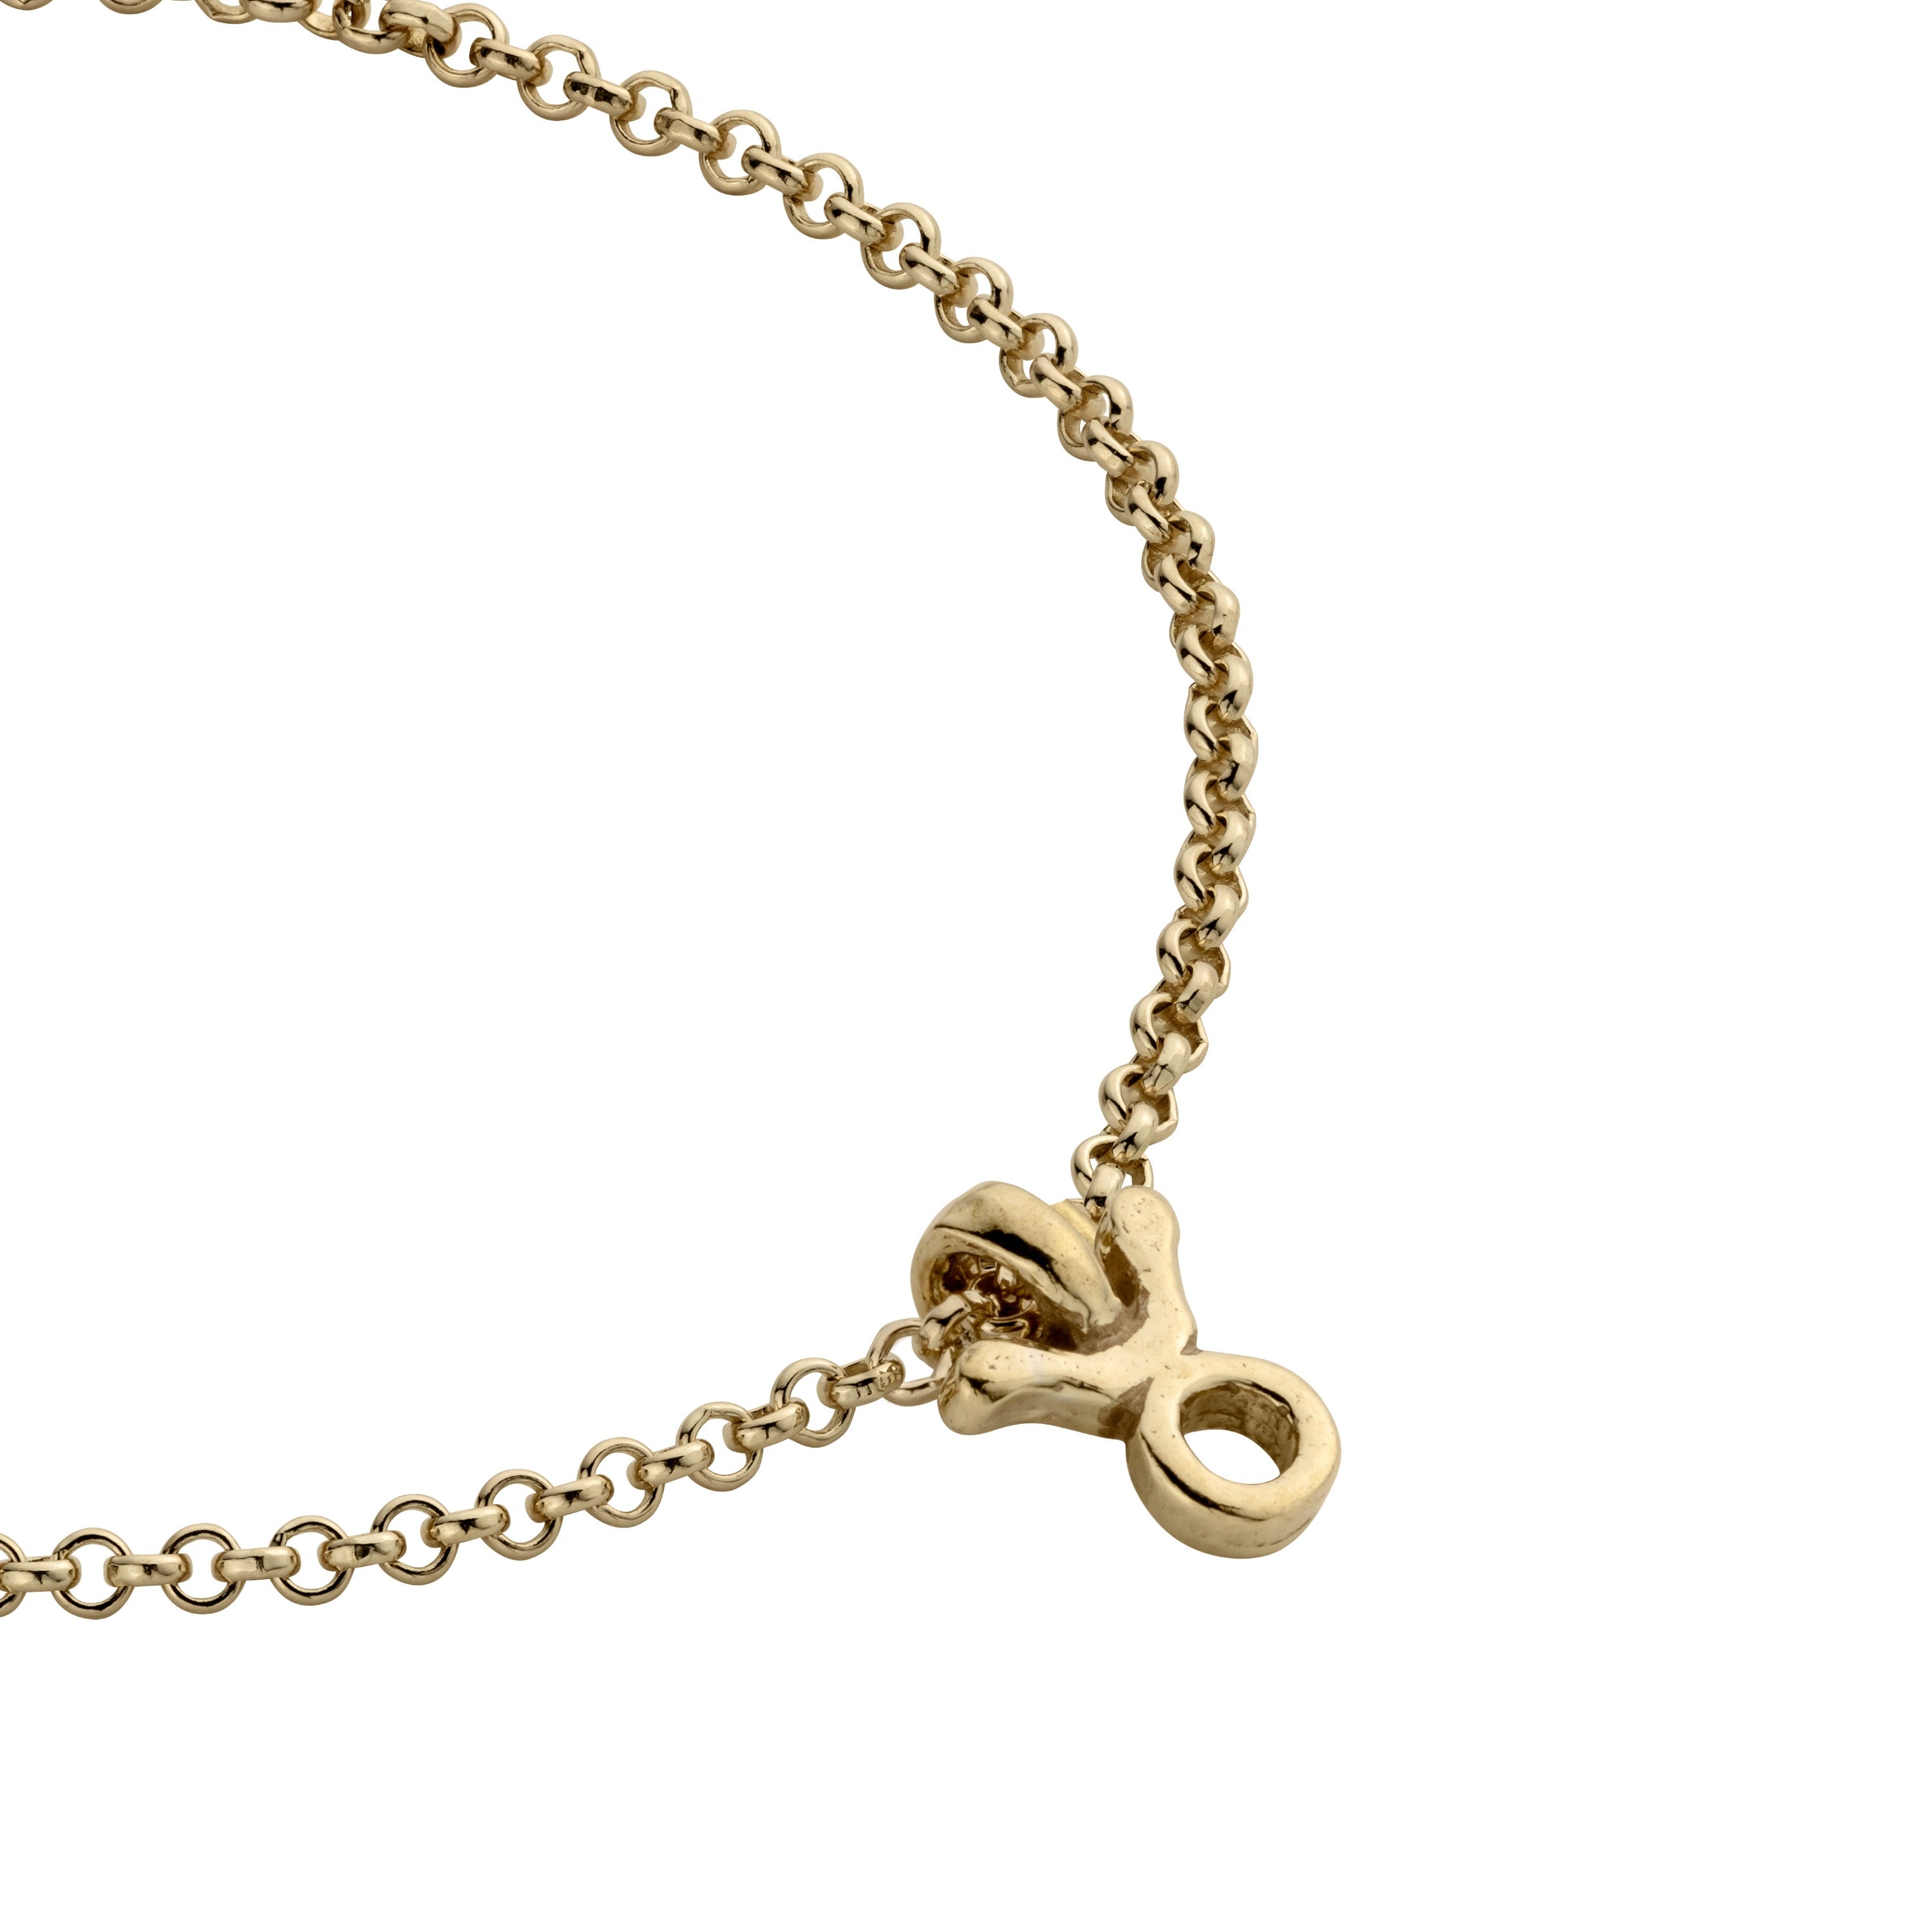 Gold Mini Taurus Horoscope Chain Bracelet